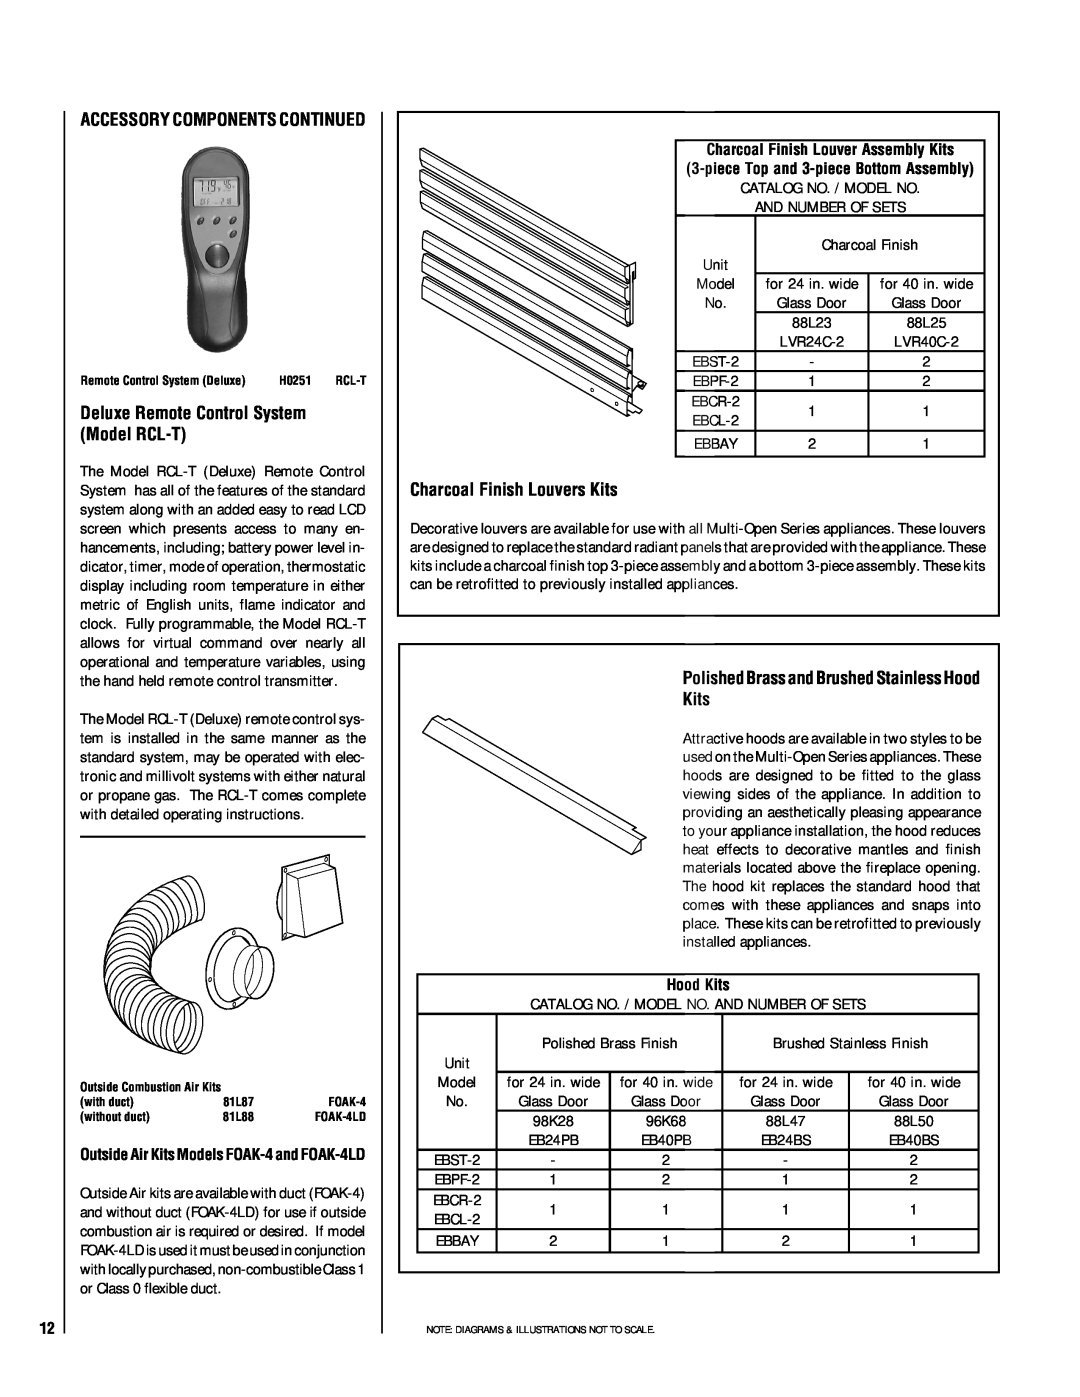 Lennox Hearth EBSTPM-2, EBSTNM-2 manual Deluxe Remote Control System Model RCL-T, Charcoal Finish Louvers Kits, Hood Kits 